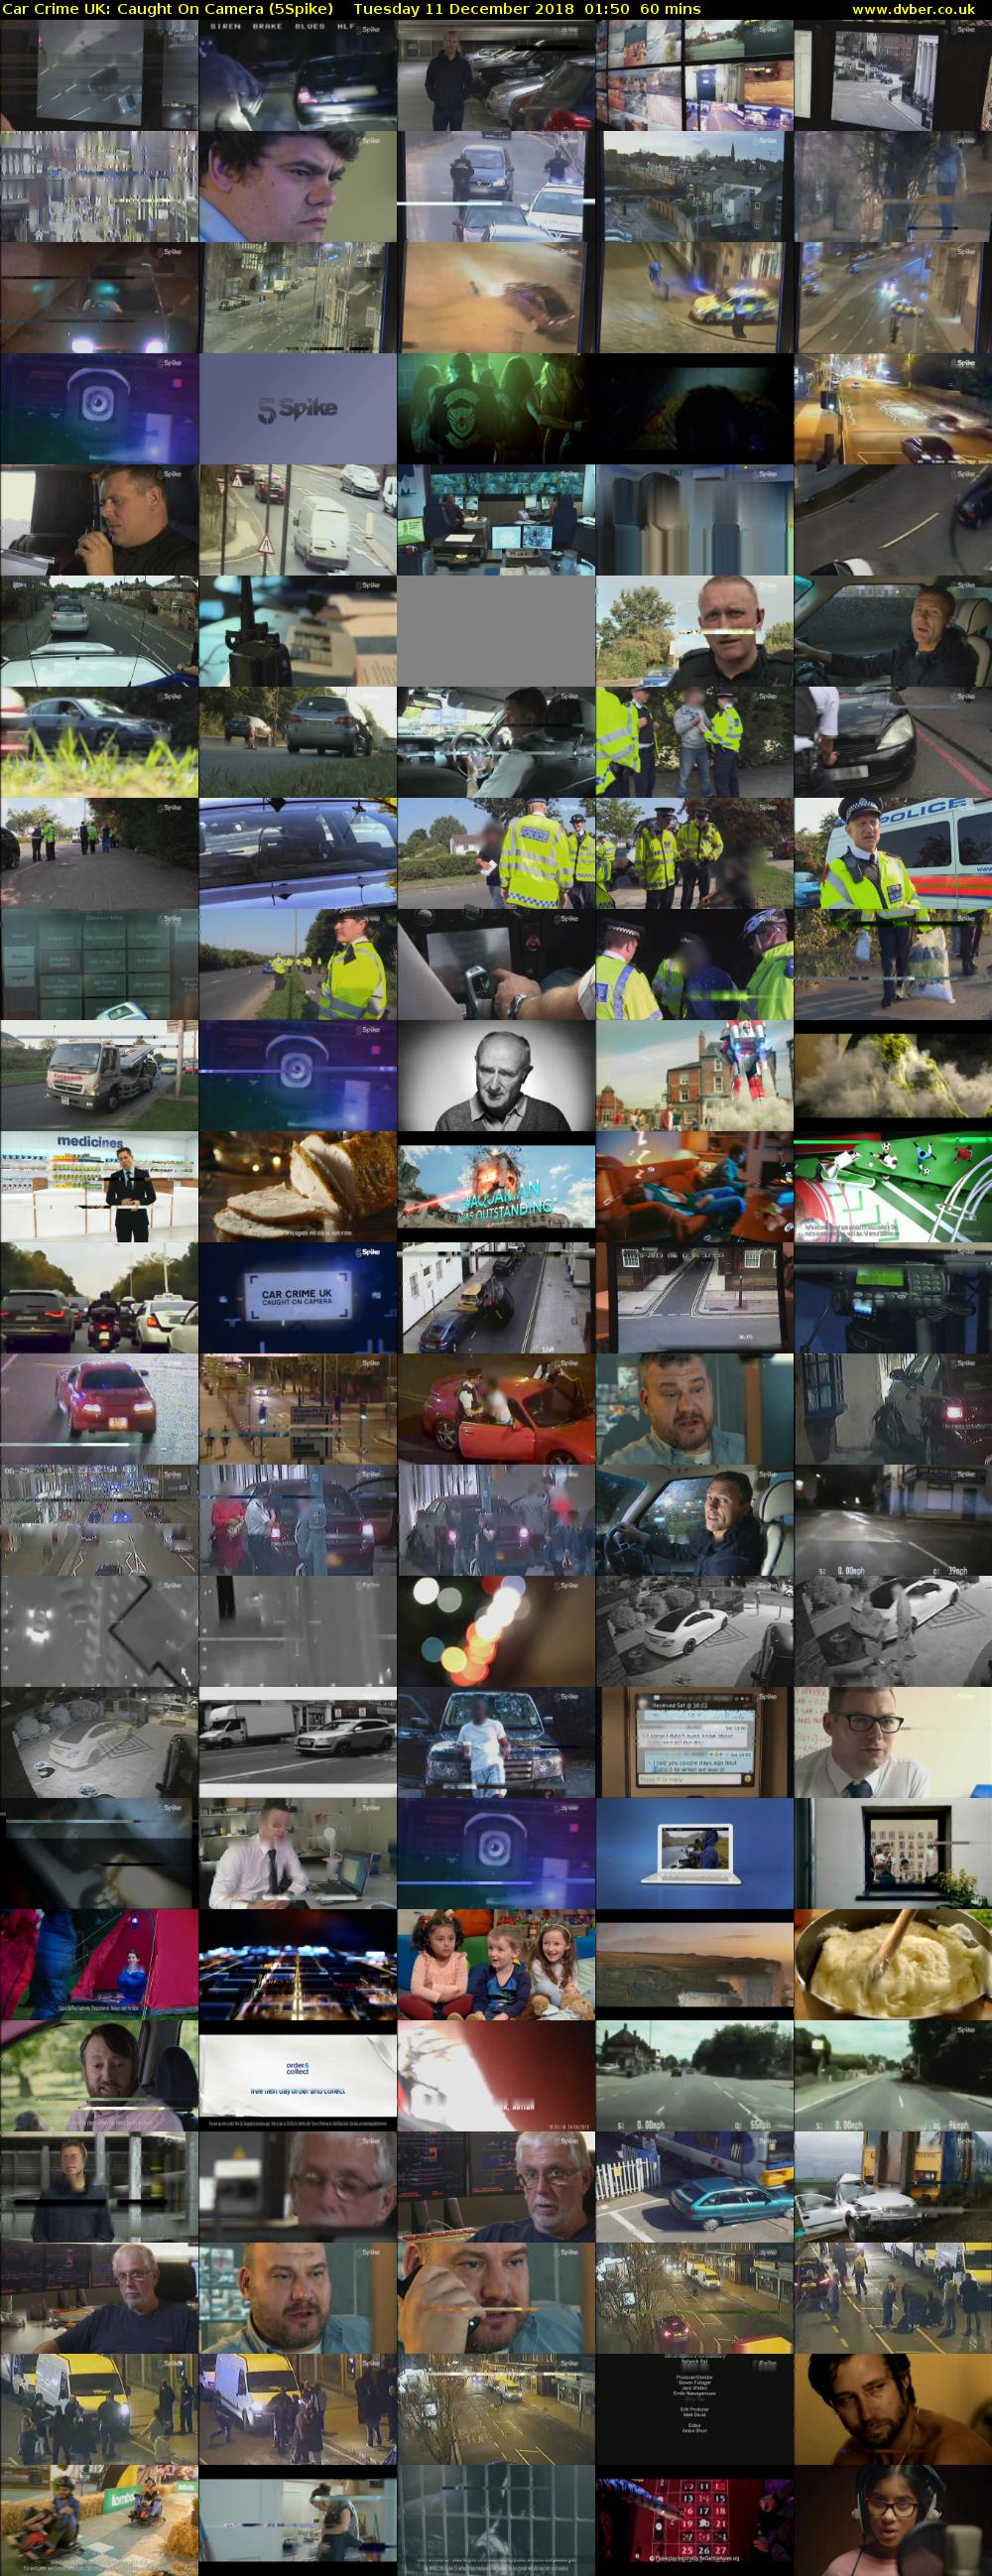 Car Crime UK: Caught On Camera (5Spike) Tuesday 11 December 2018 01:50 - 02:50